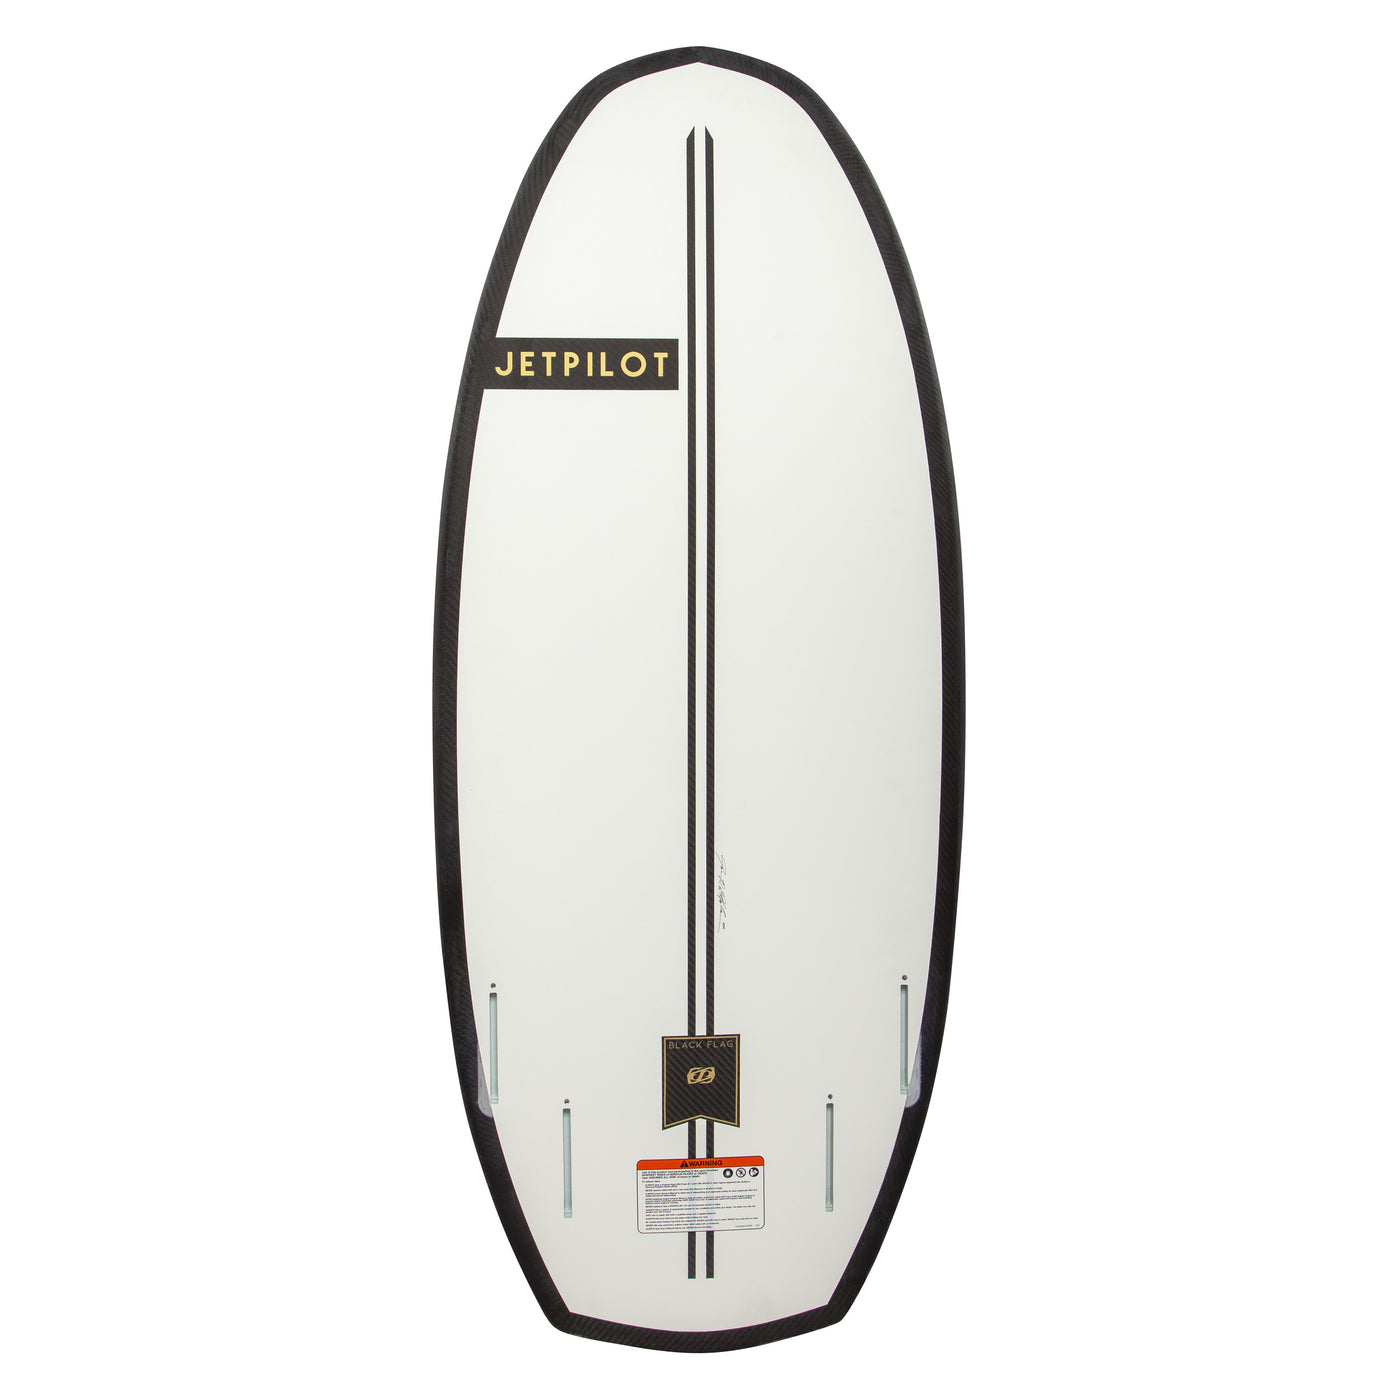 Rear image of the Jetpilot Black Flag wake surfboard.